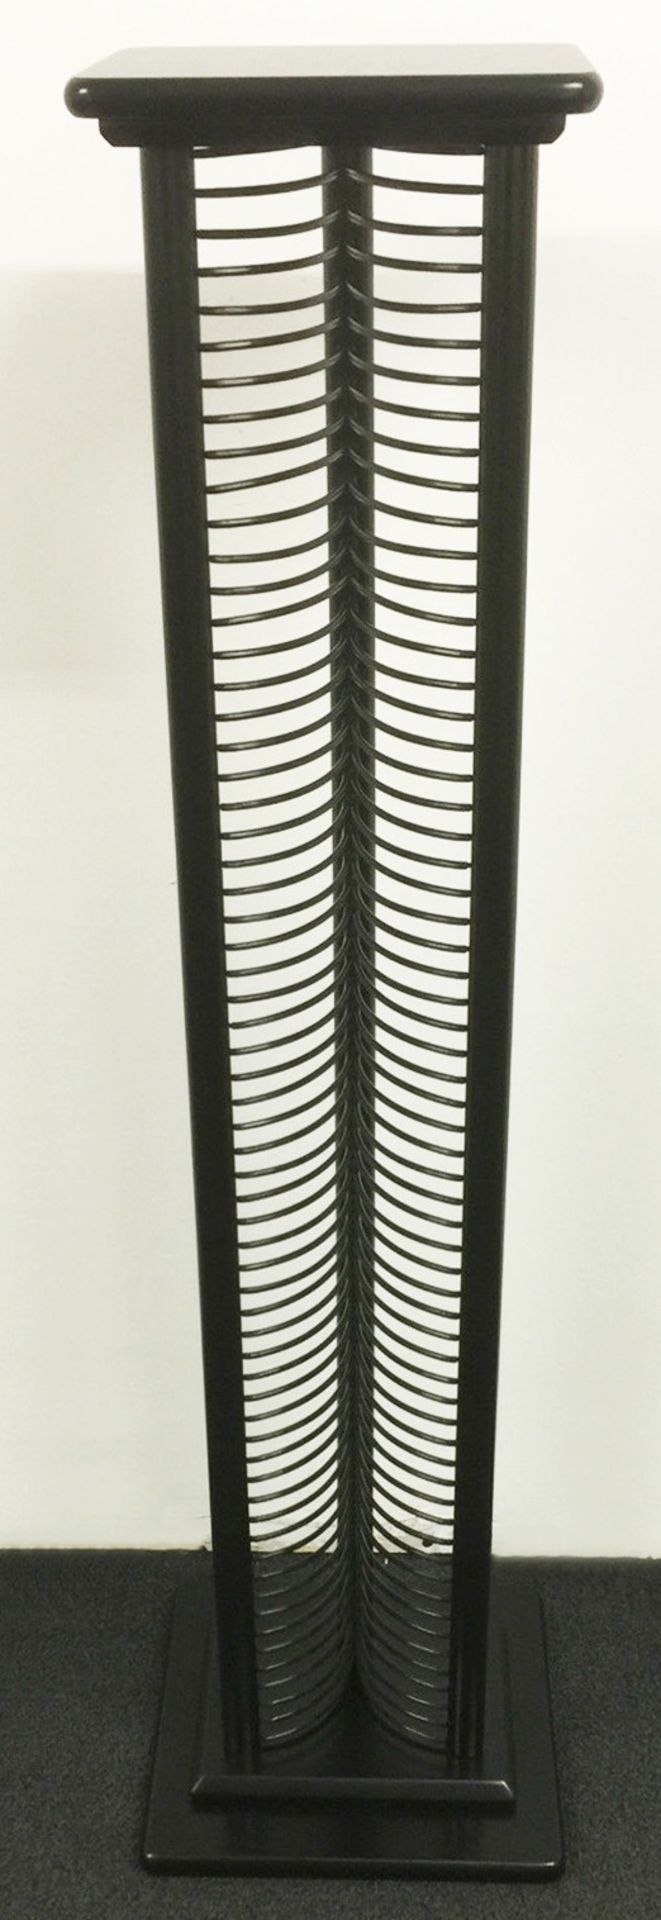 1 x Black Wooden Upright CD Rack - Interchangeable Plastic Shelves - 105cm High With 60 CD